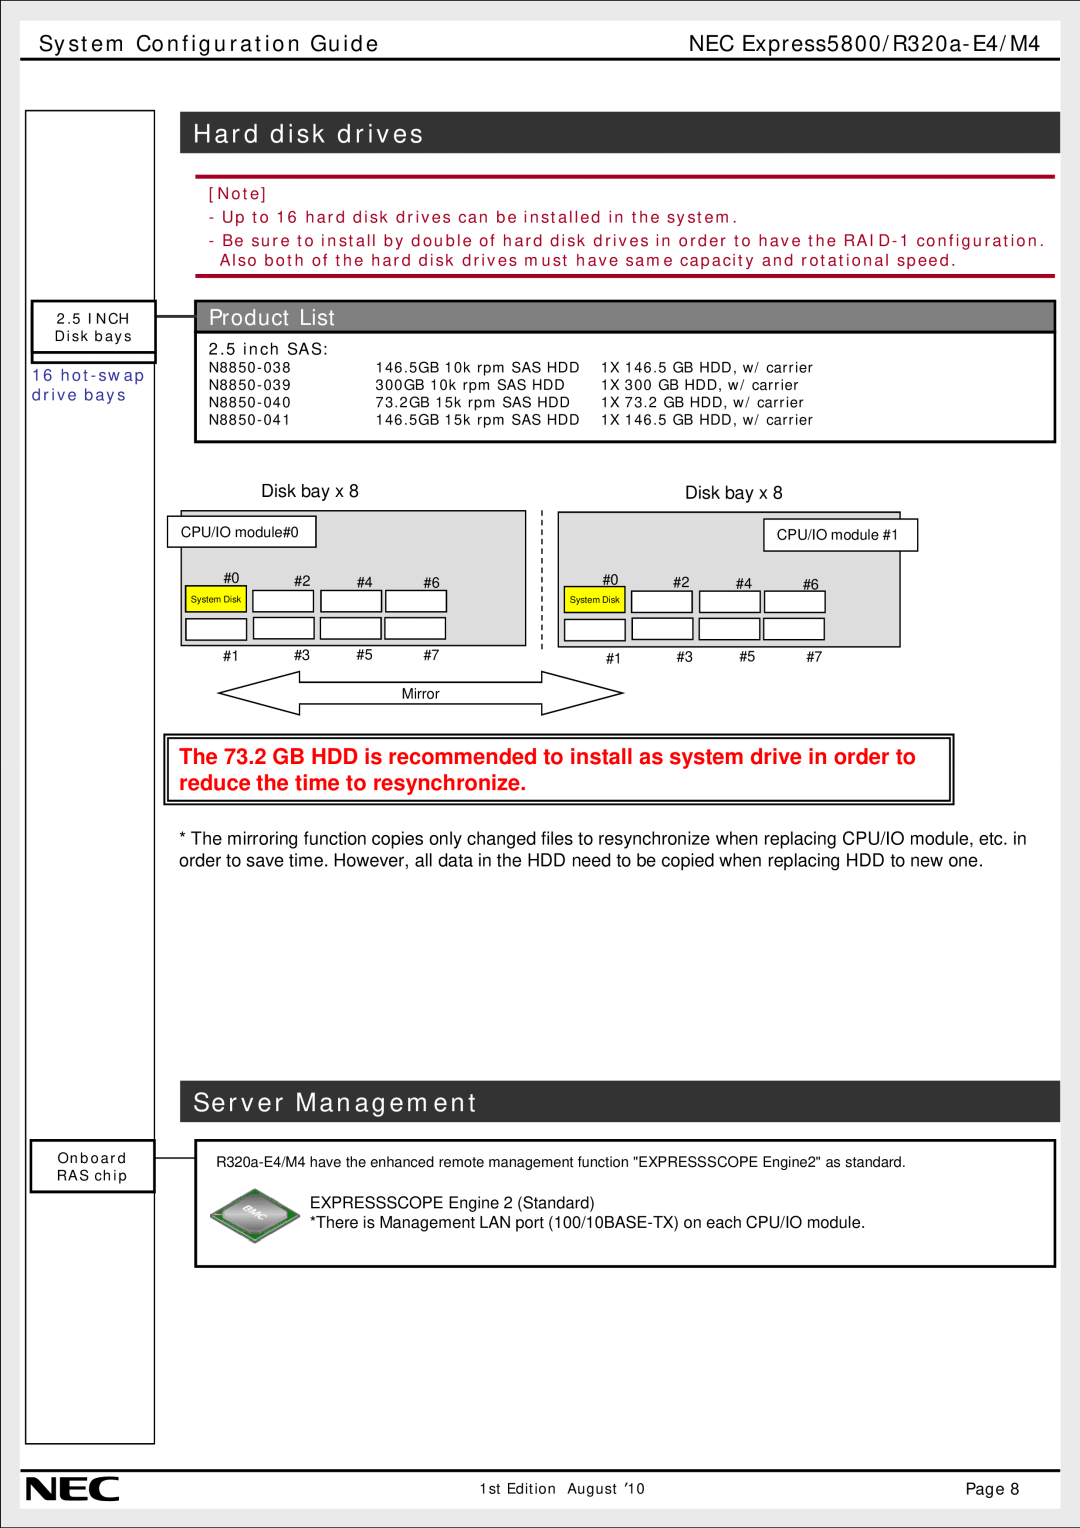 NEC R320A-E4 Hard disk drives, Server Management, System Configuration Guide, NEC Express5800/R320a-E4/M4, Product List 